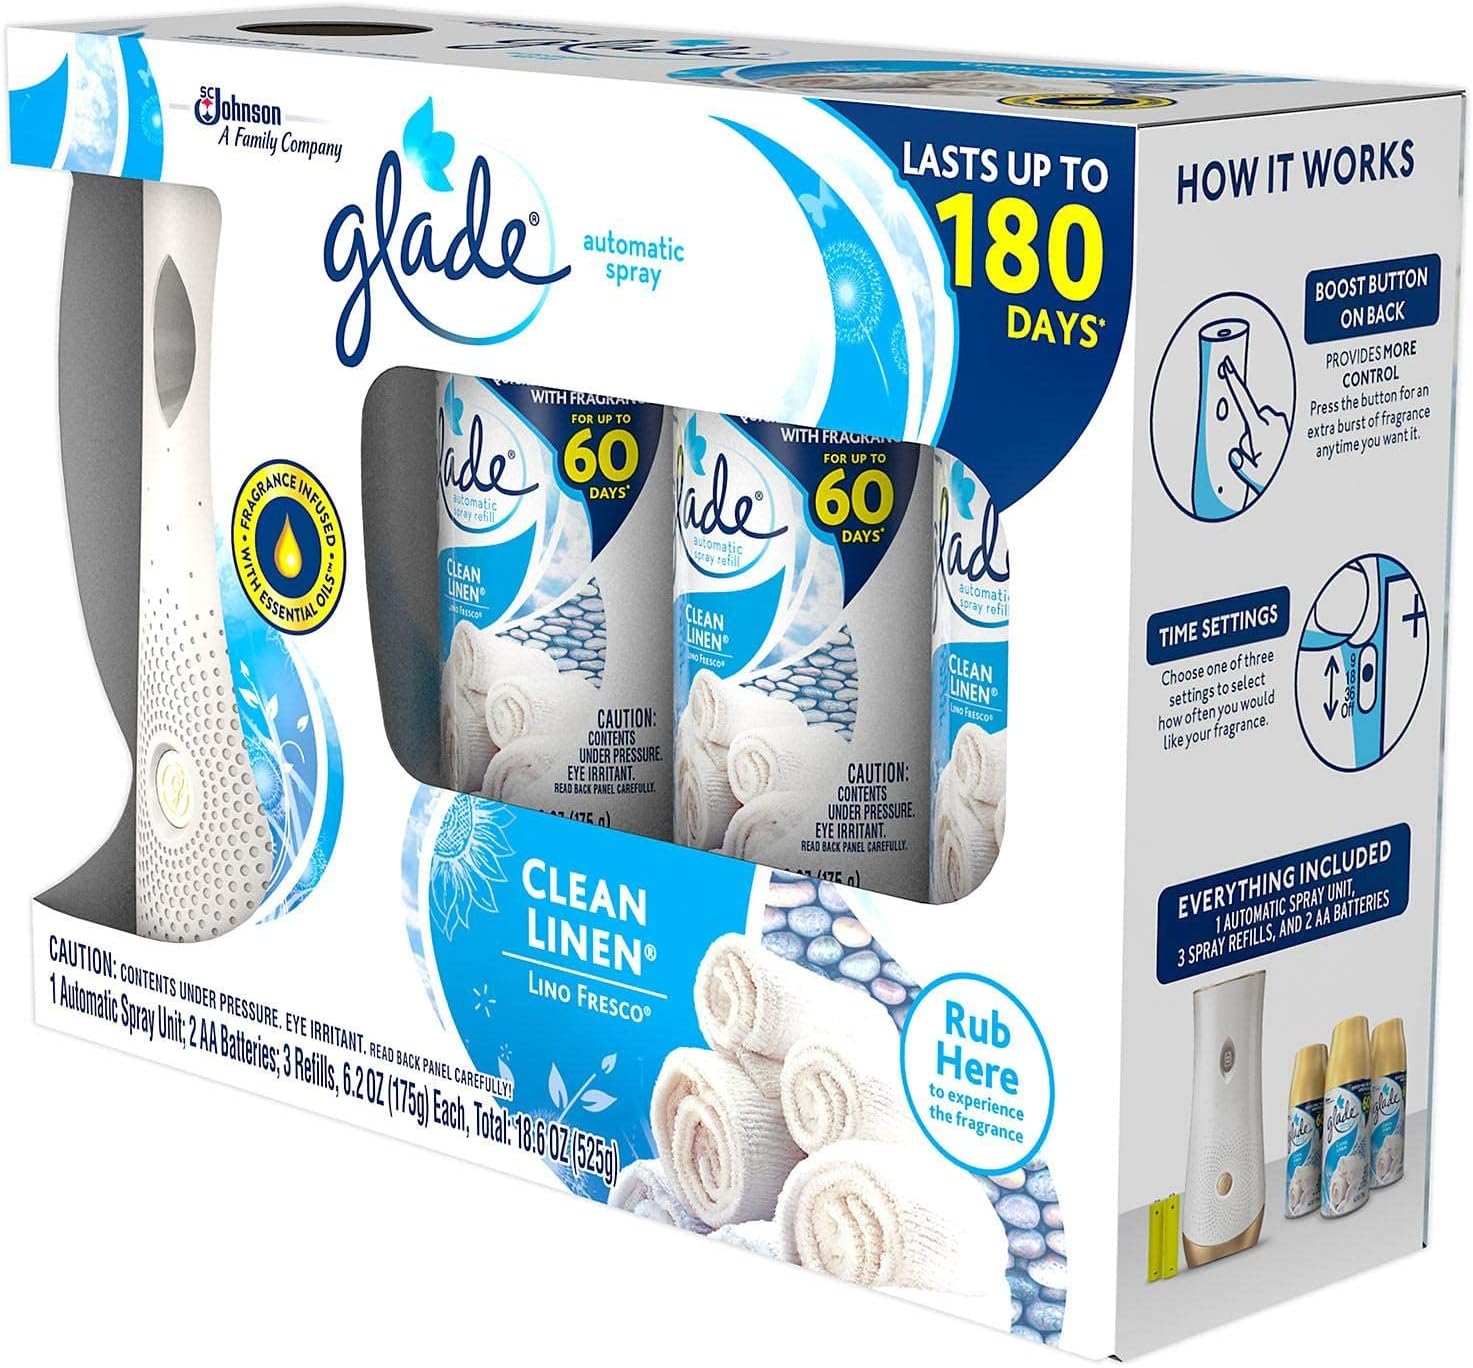 Glade Automatic Spray Air Freshener 1 Holder + 3 Refills - Clean Linen : Health & Household